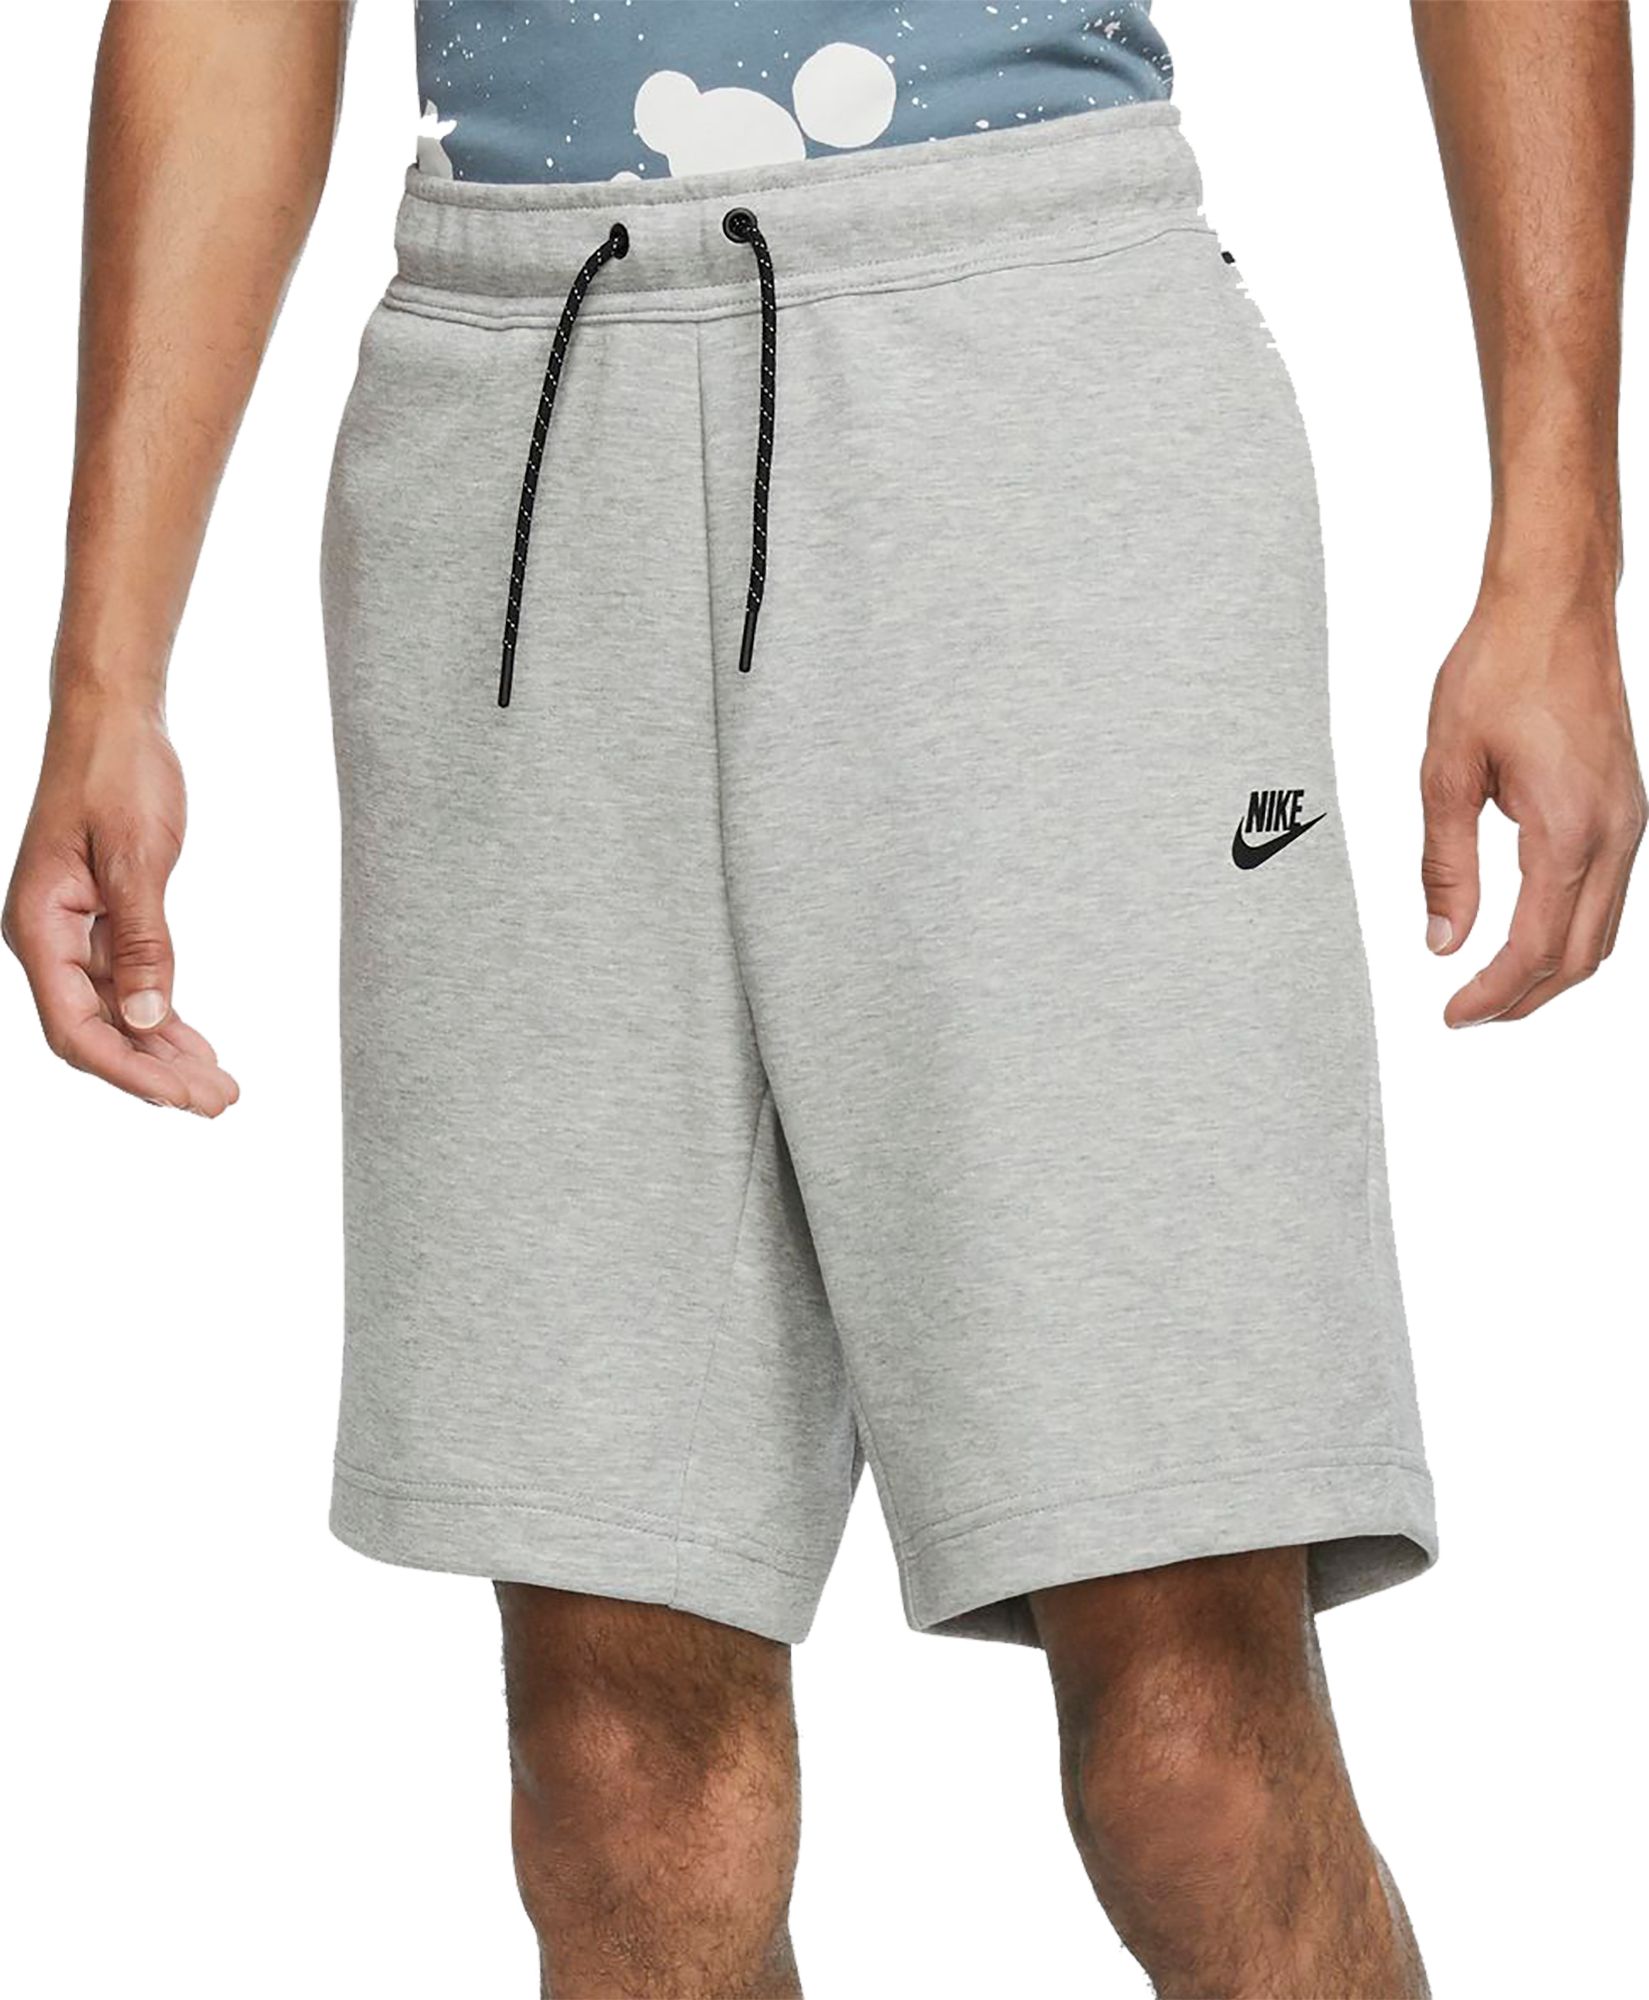 grey nike sweatpants shorts